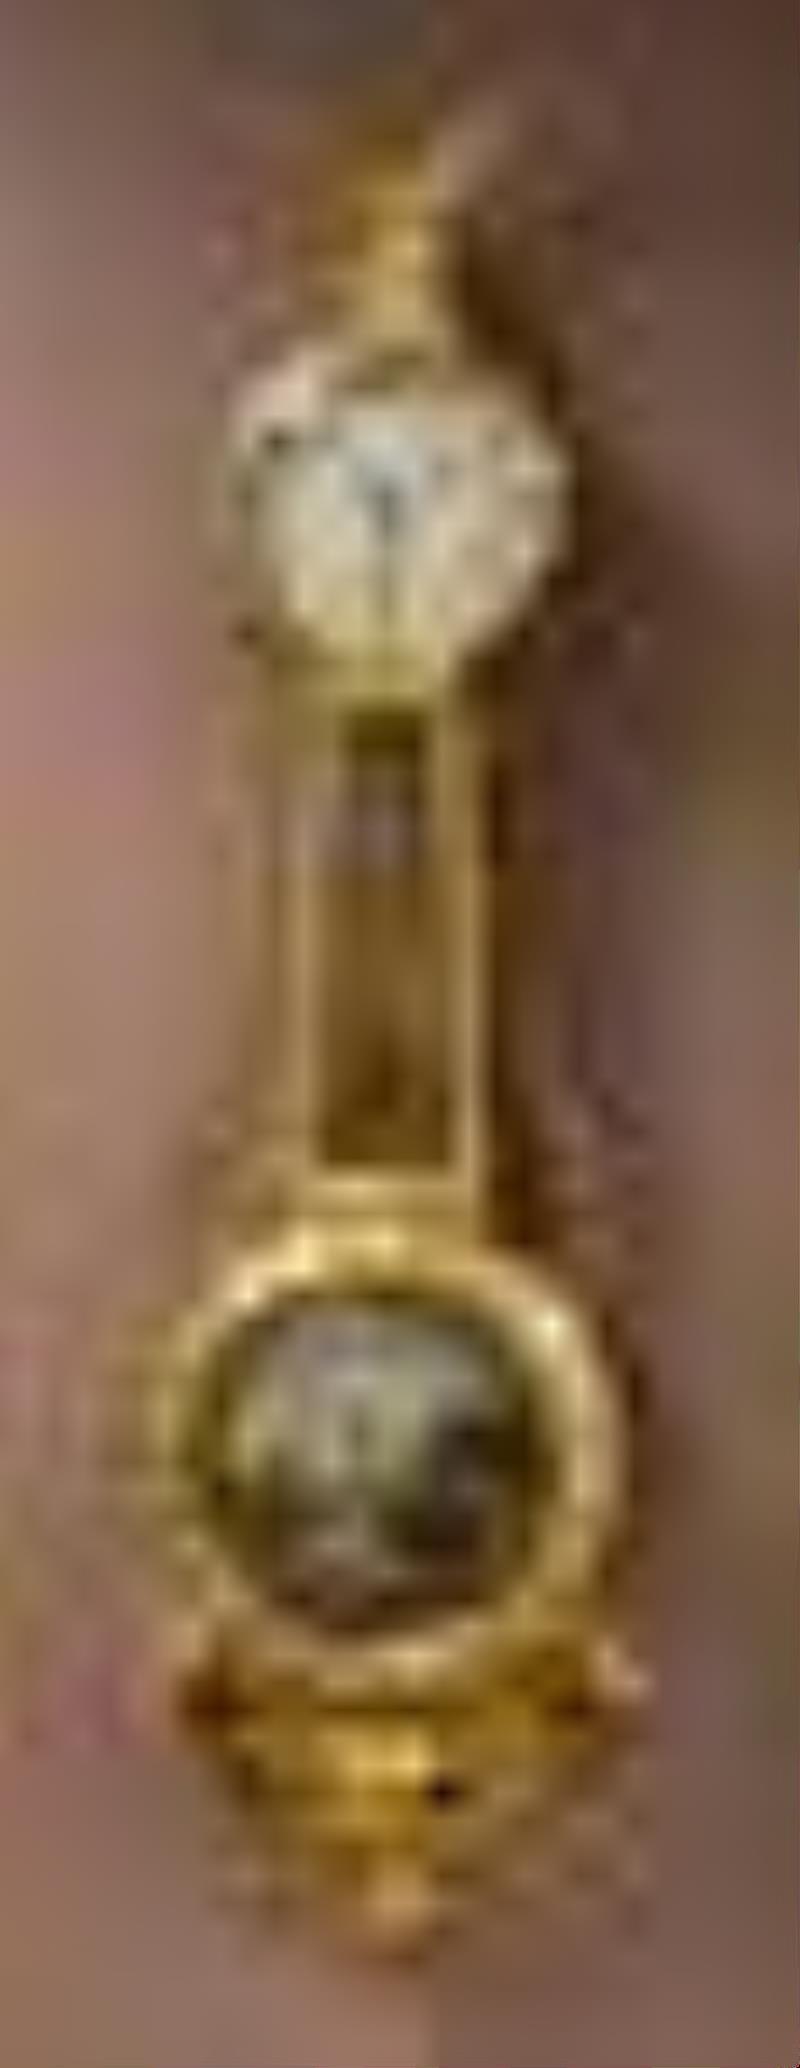 Girandole Banjo Clock by Foster S. Campos, Pembroke, MA